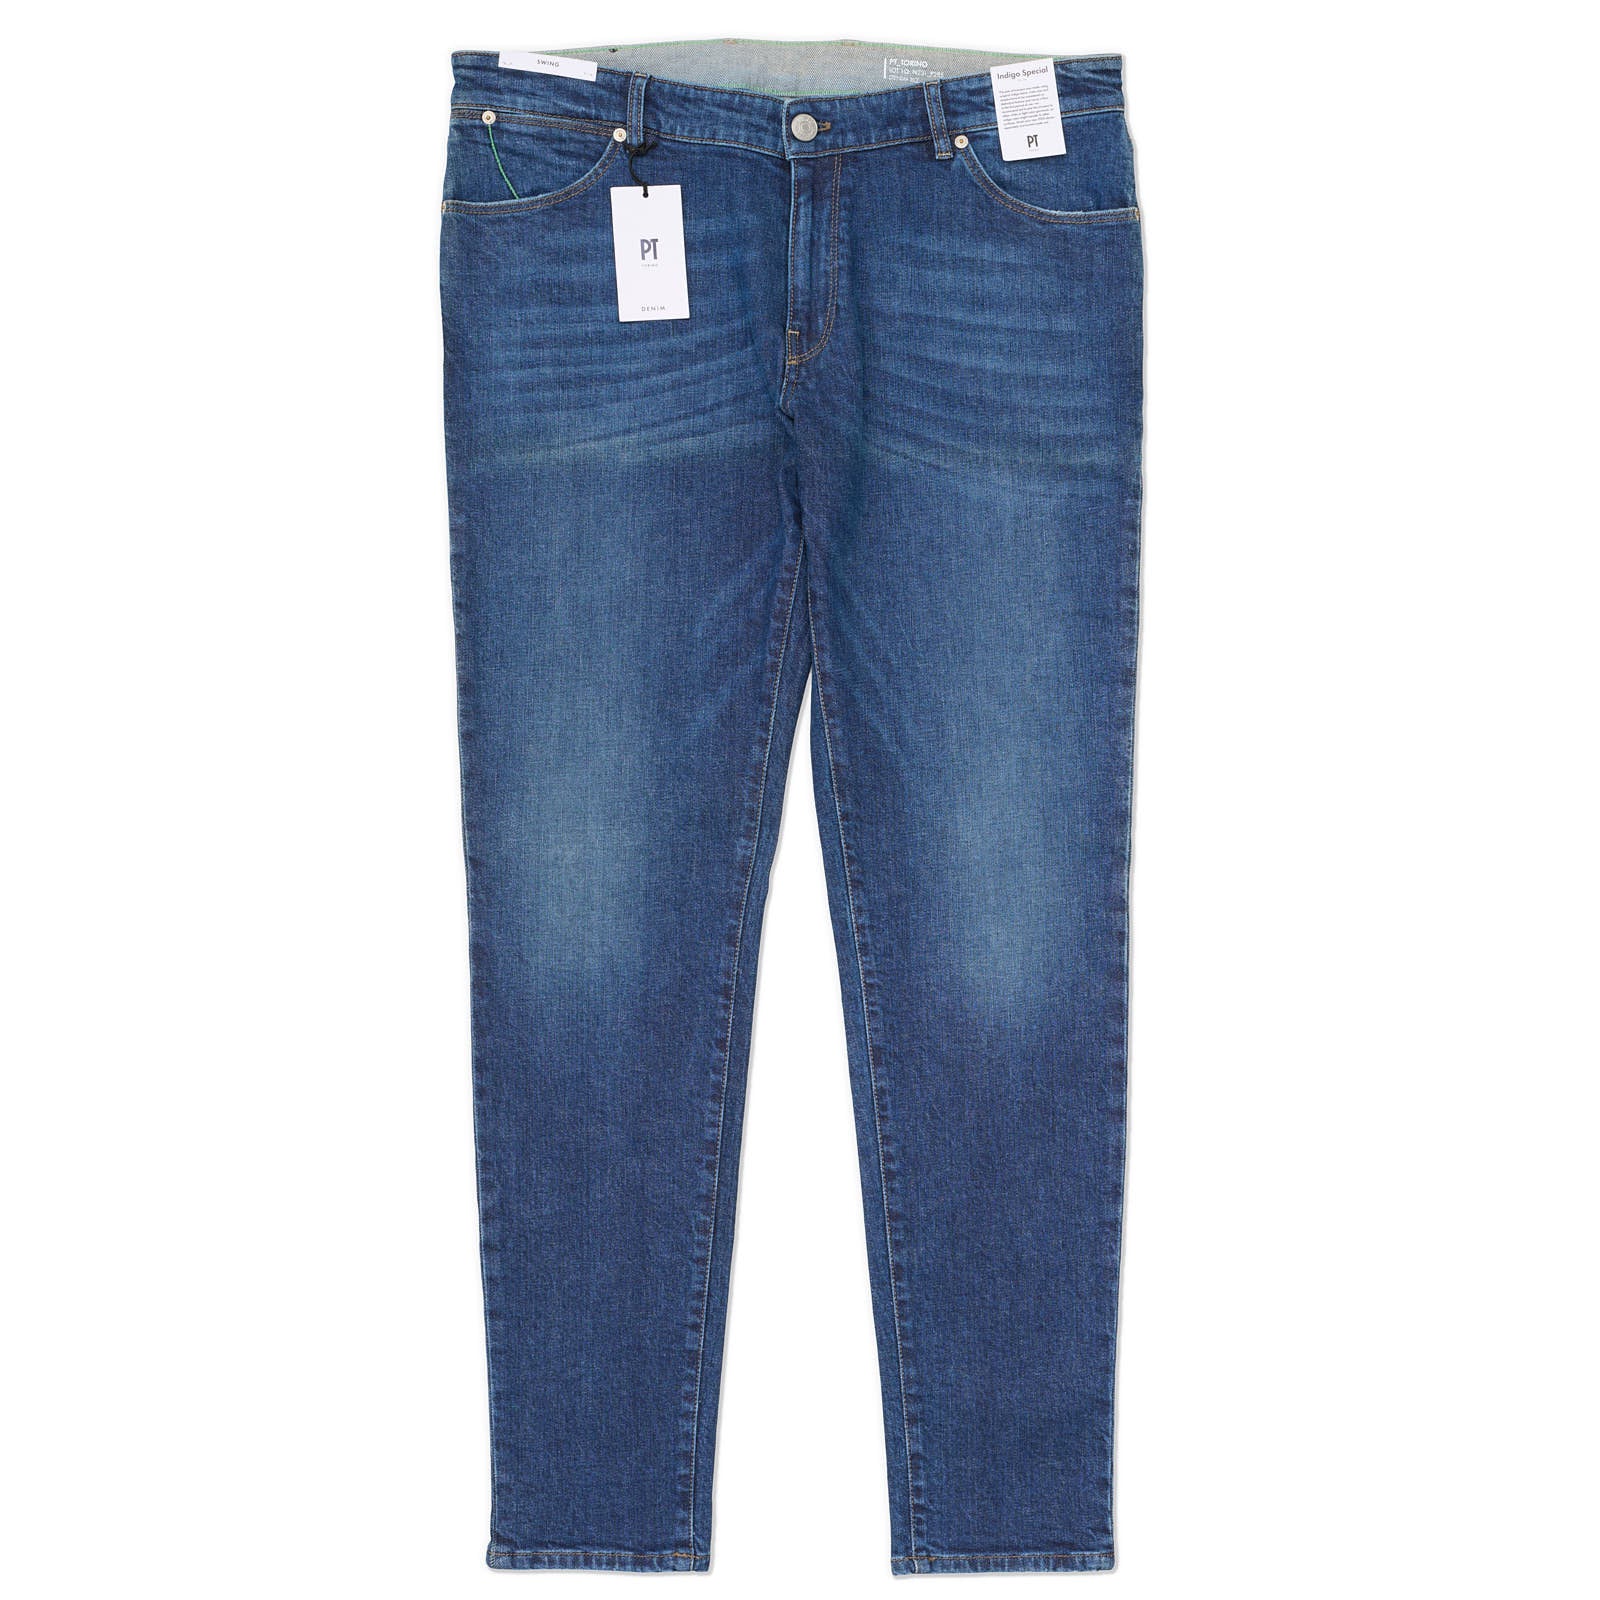 PT05 "Swing" Indigo Blue Denim Cotton Slim Fit Jeans NEW US 40